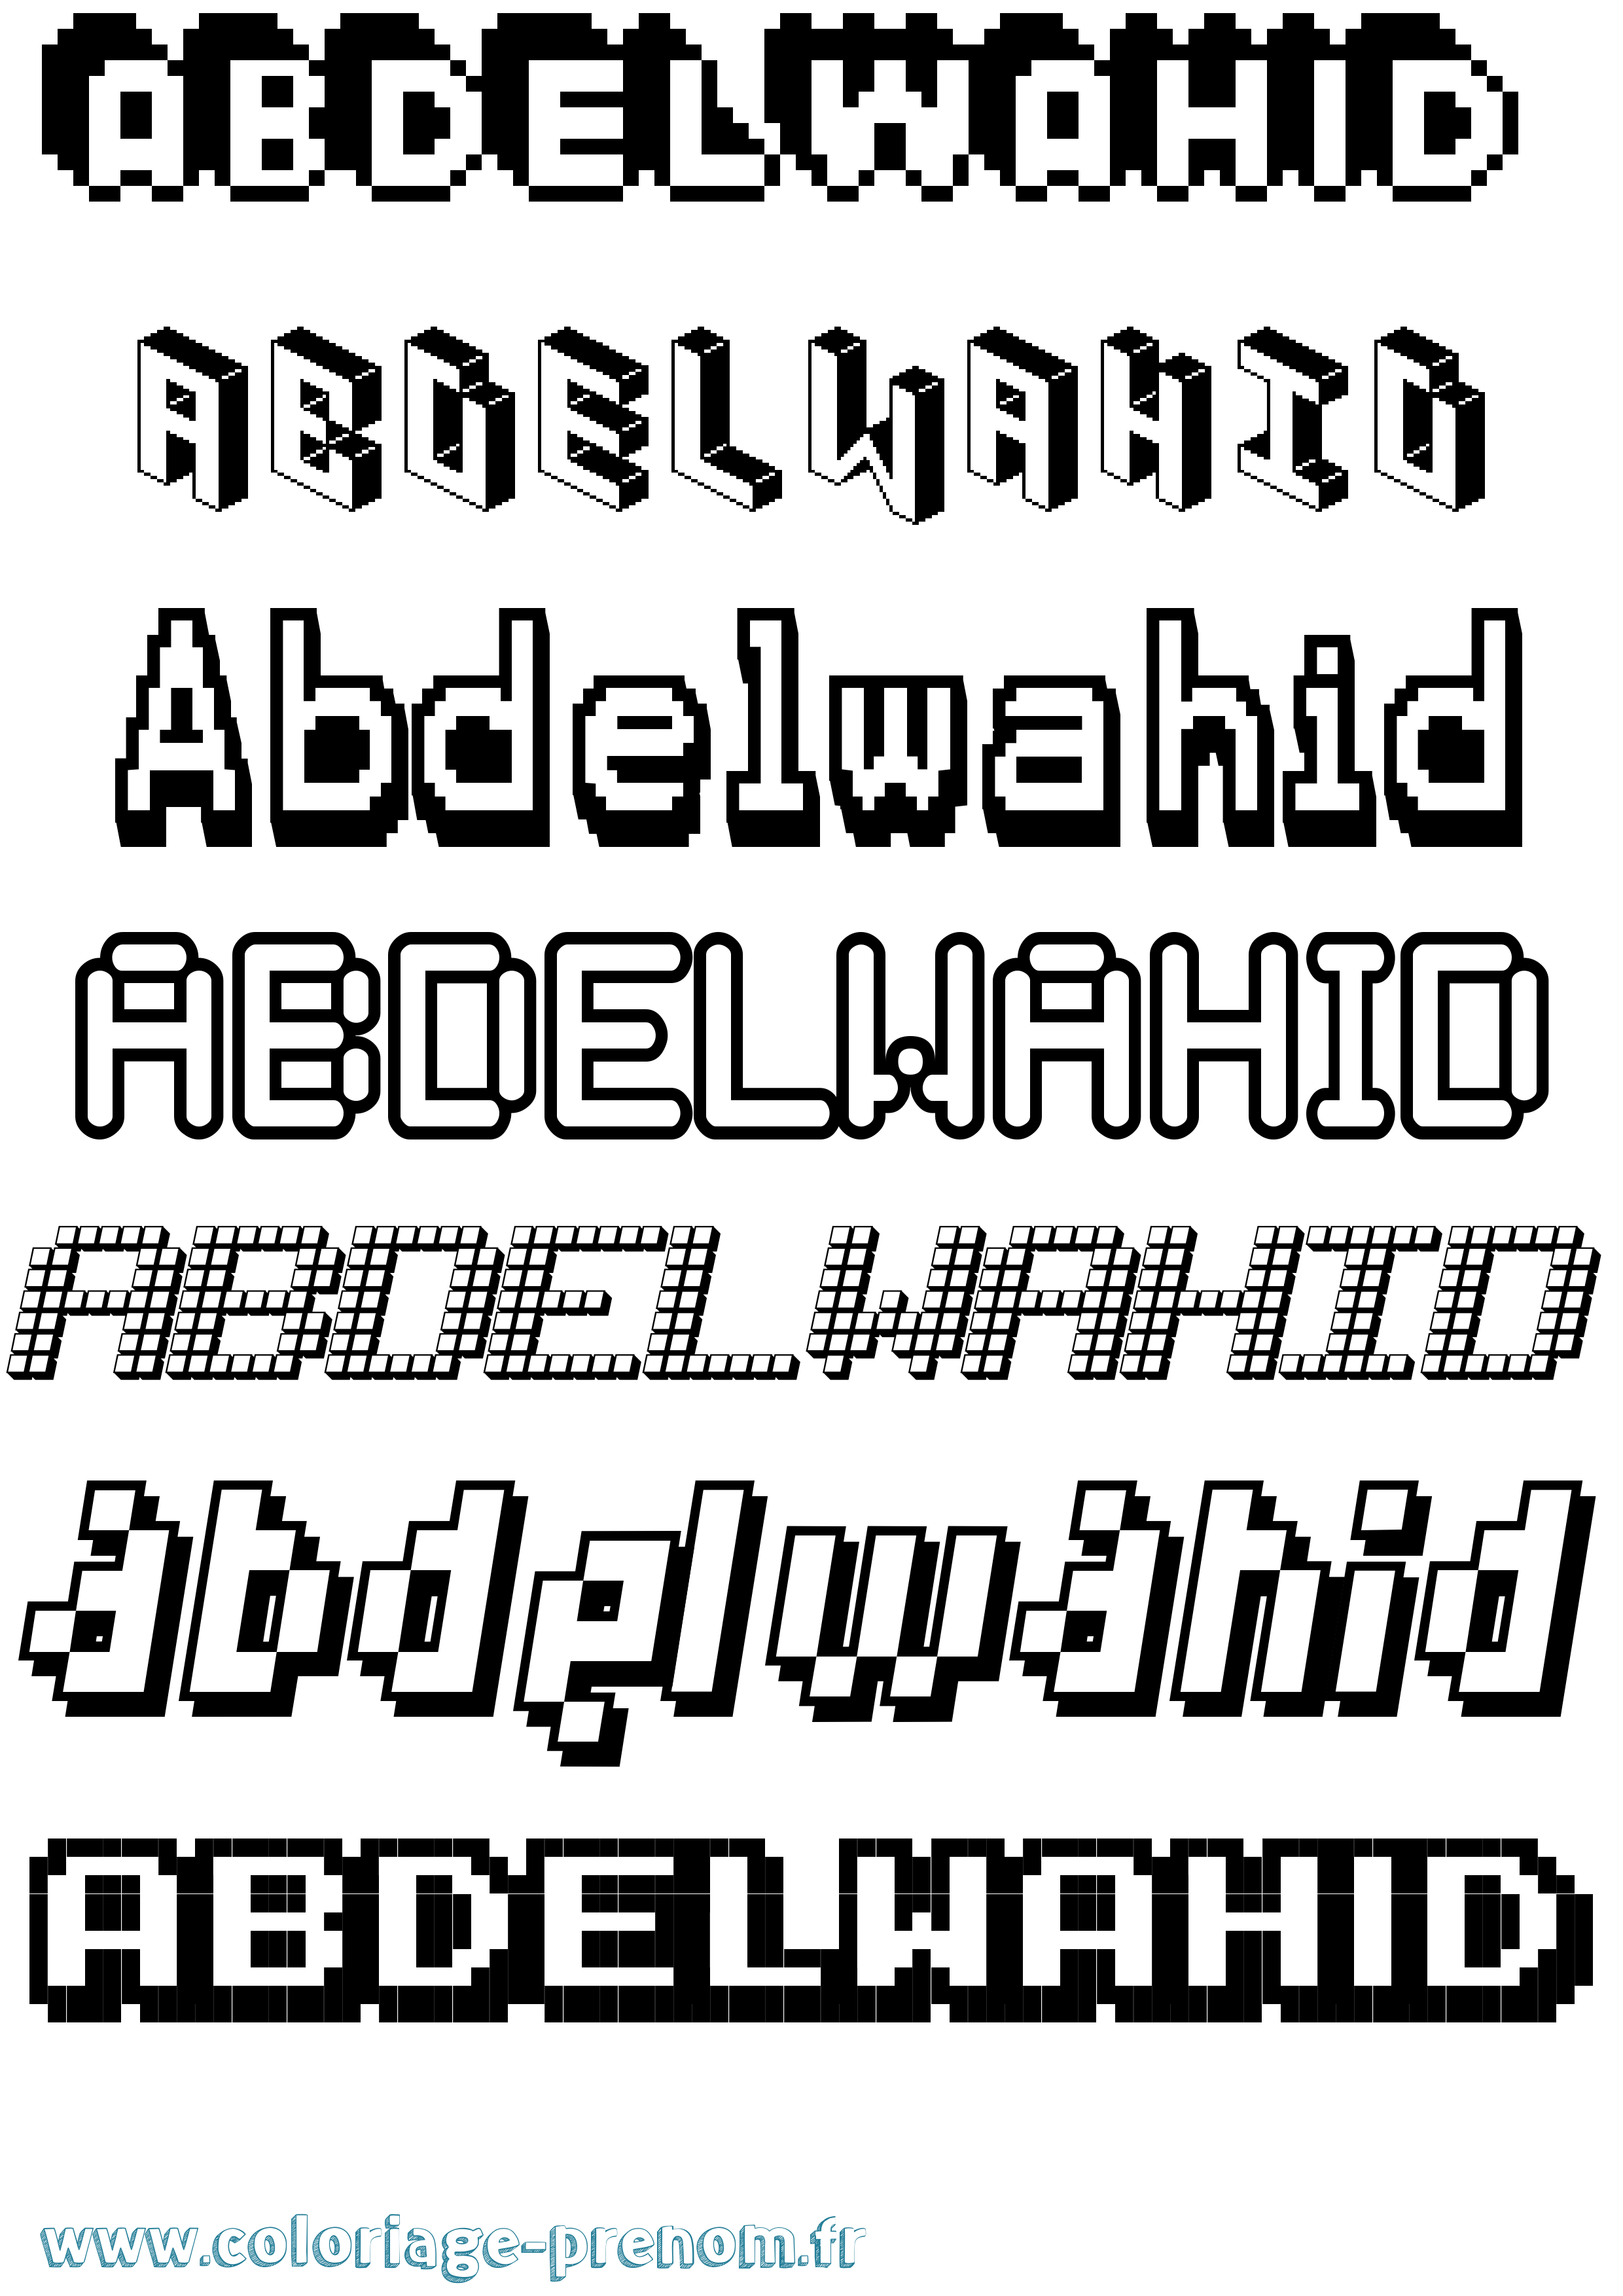 Coloriage prénom Abdelwahid Pixel